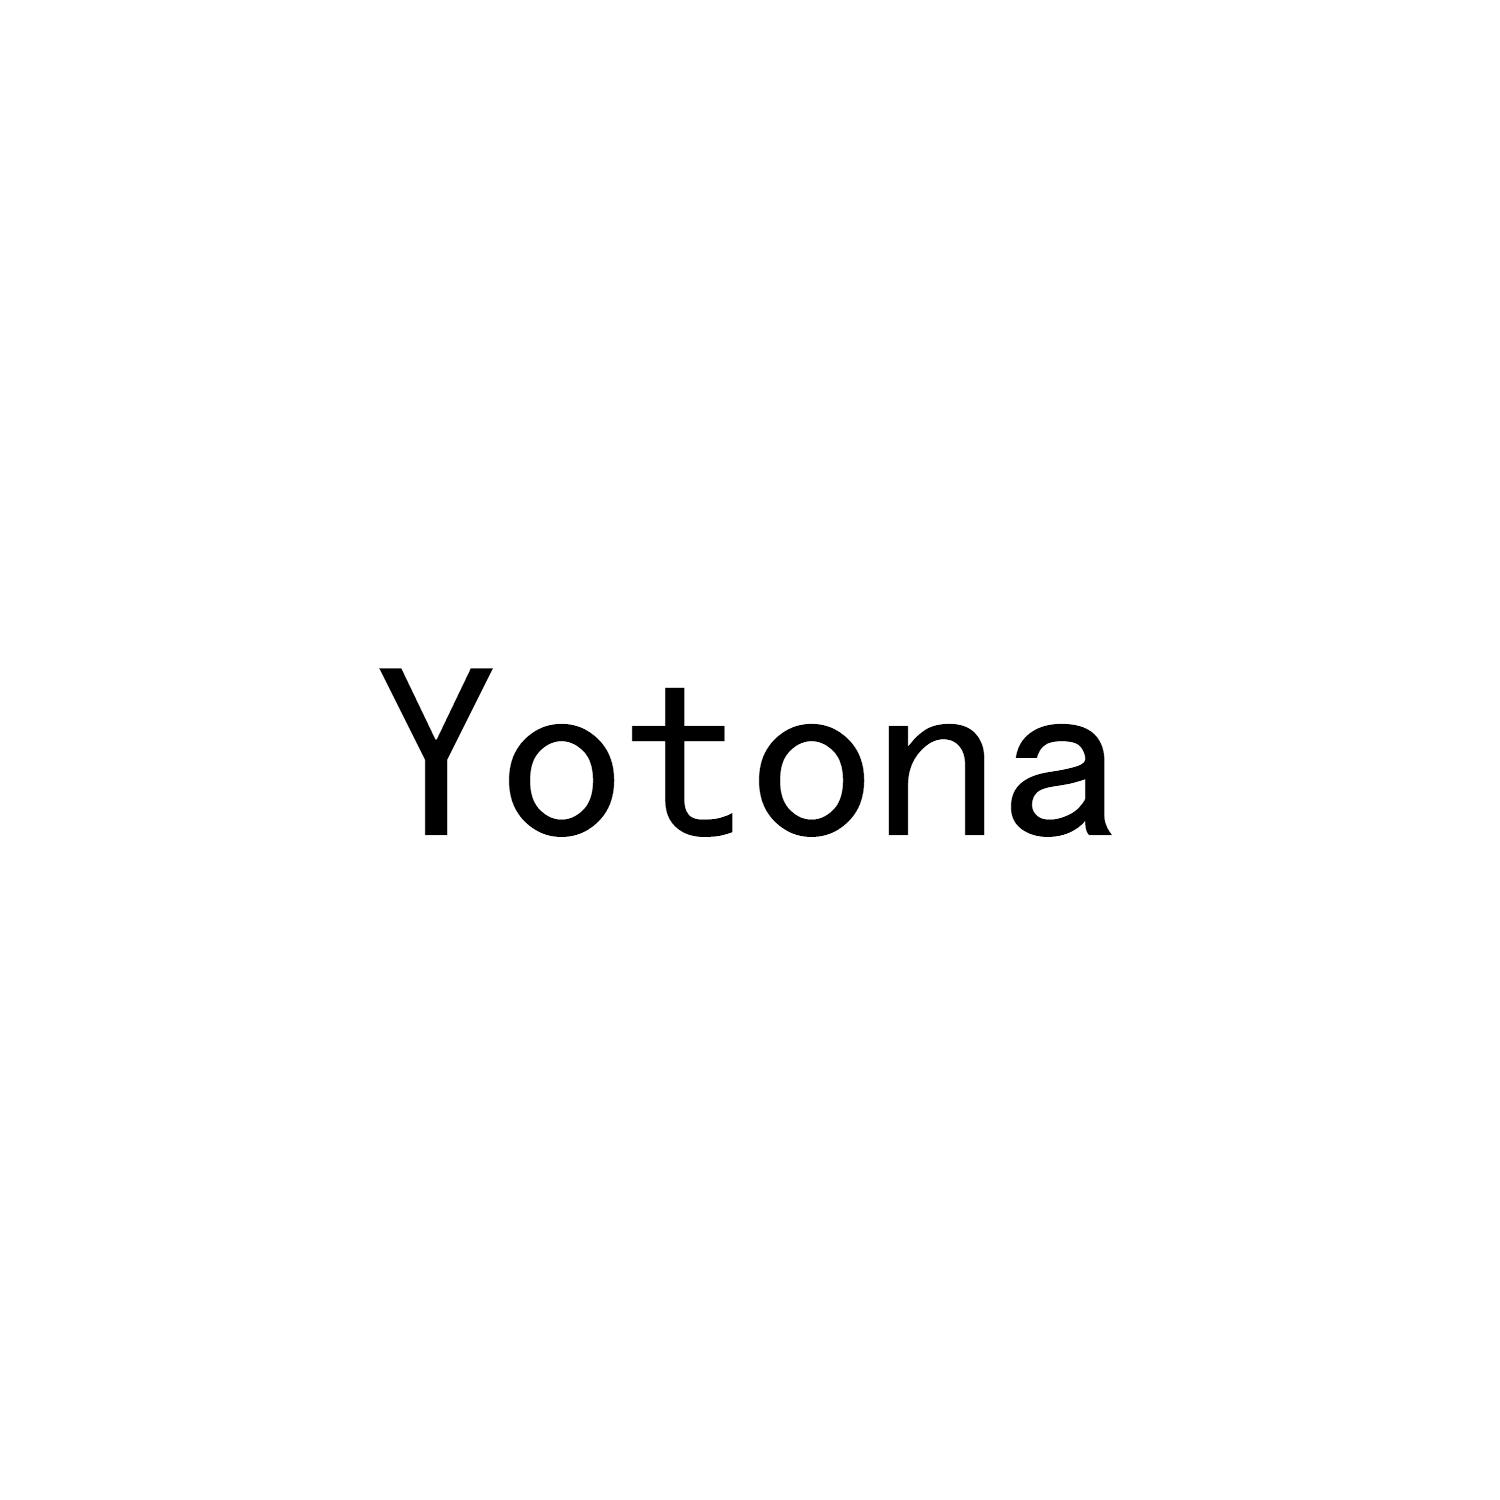 30类-面点饮品YOTONA商标转让